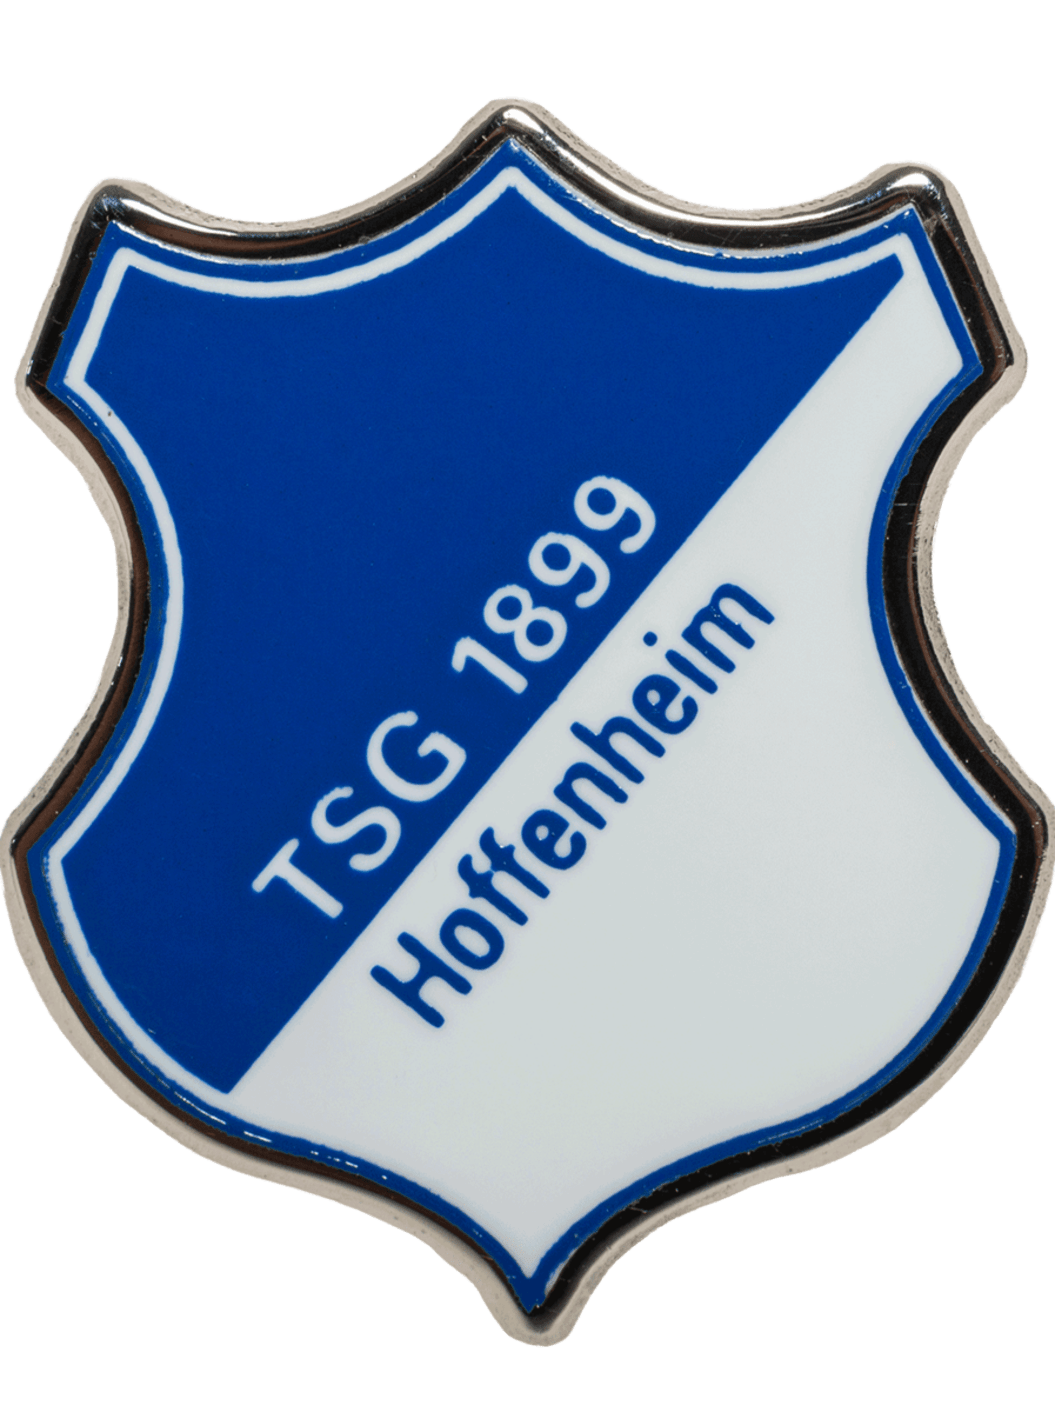 Hoffenheim Logo - Hoffenheim Logo ~ news word : The png image provided